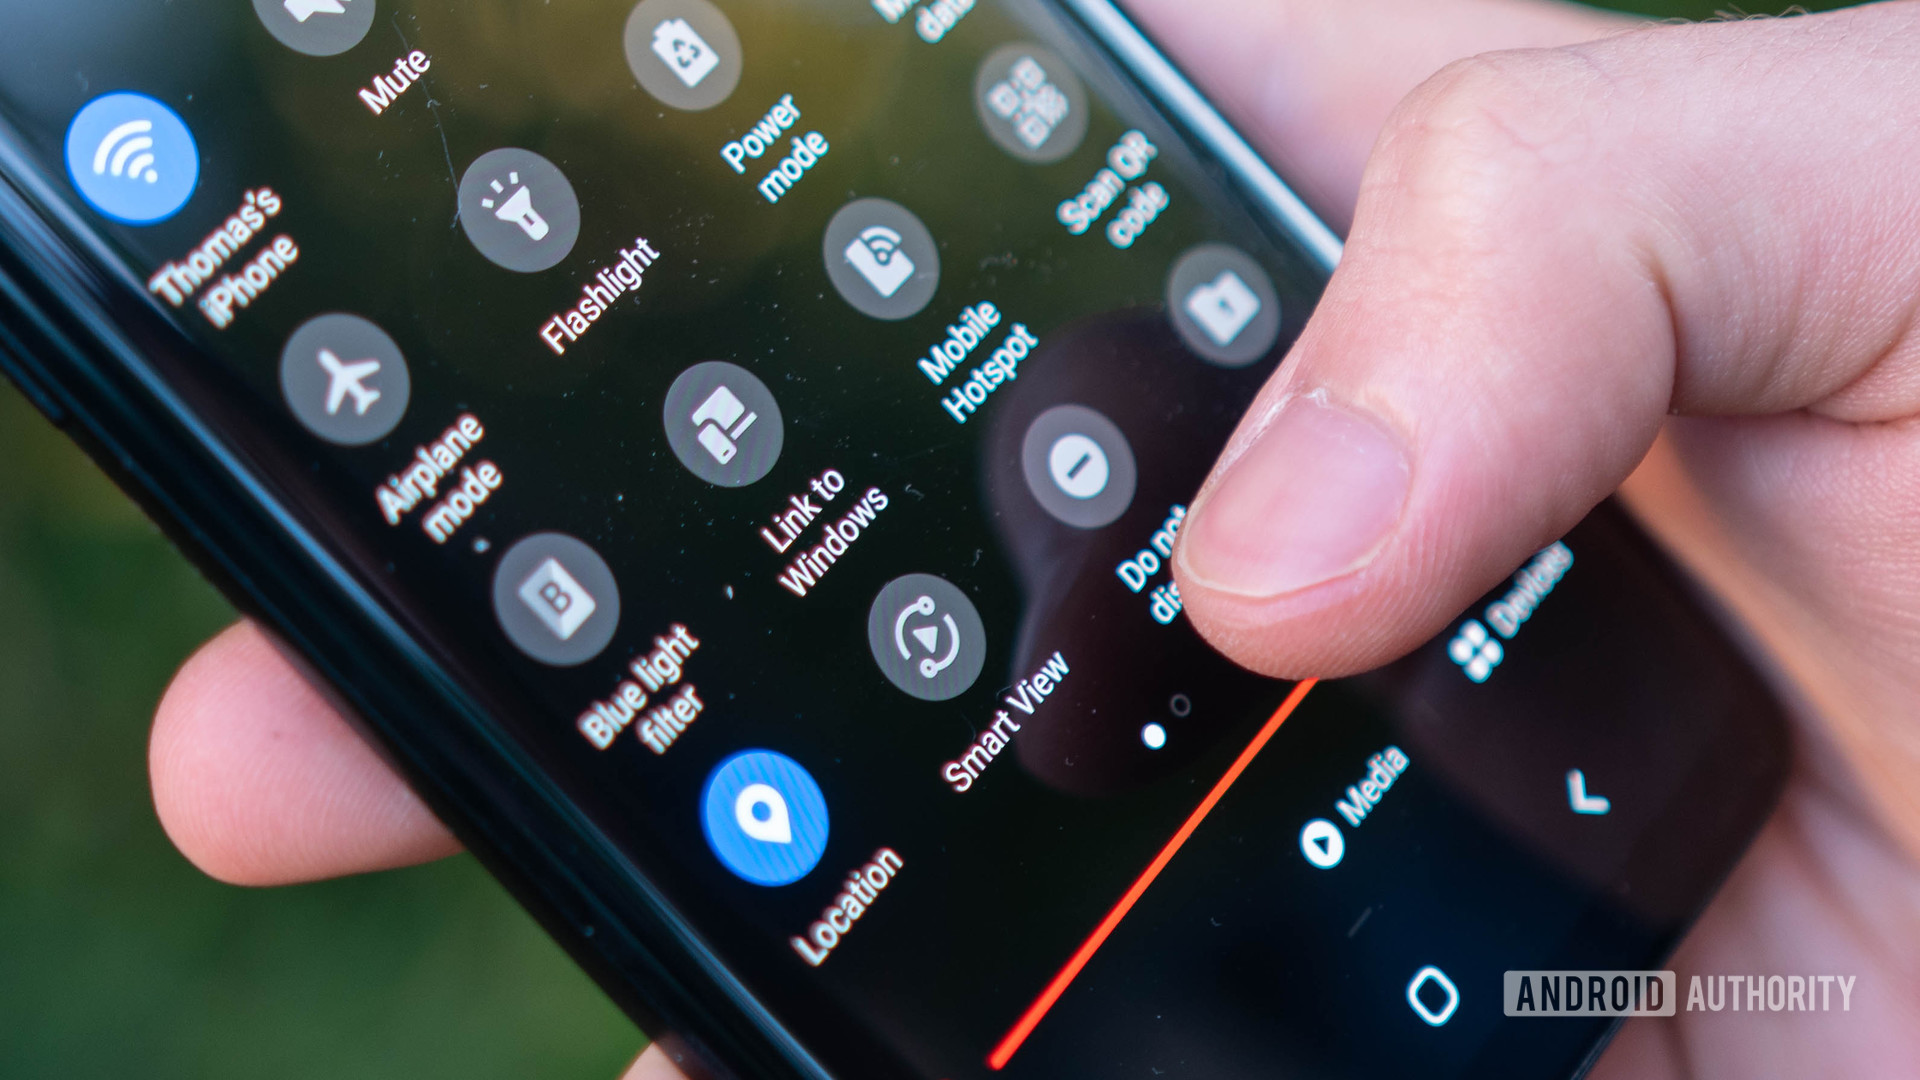 Galaxy S9 Plus Quick settings menu